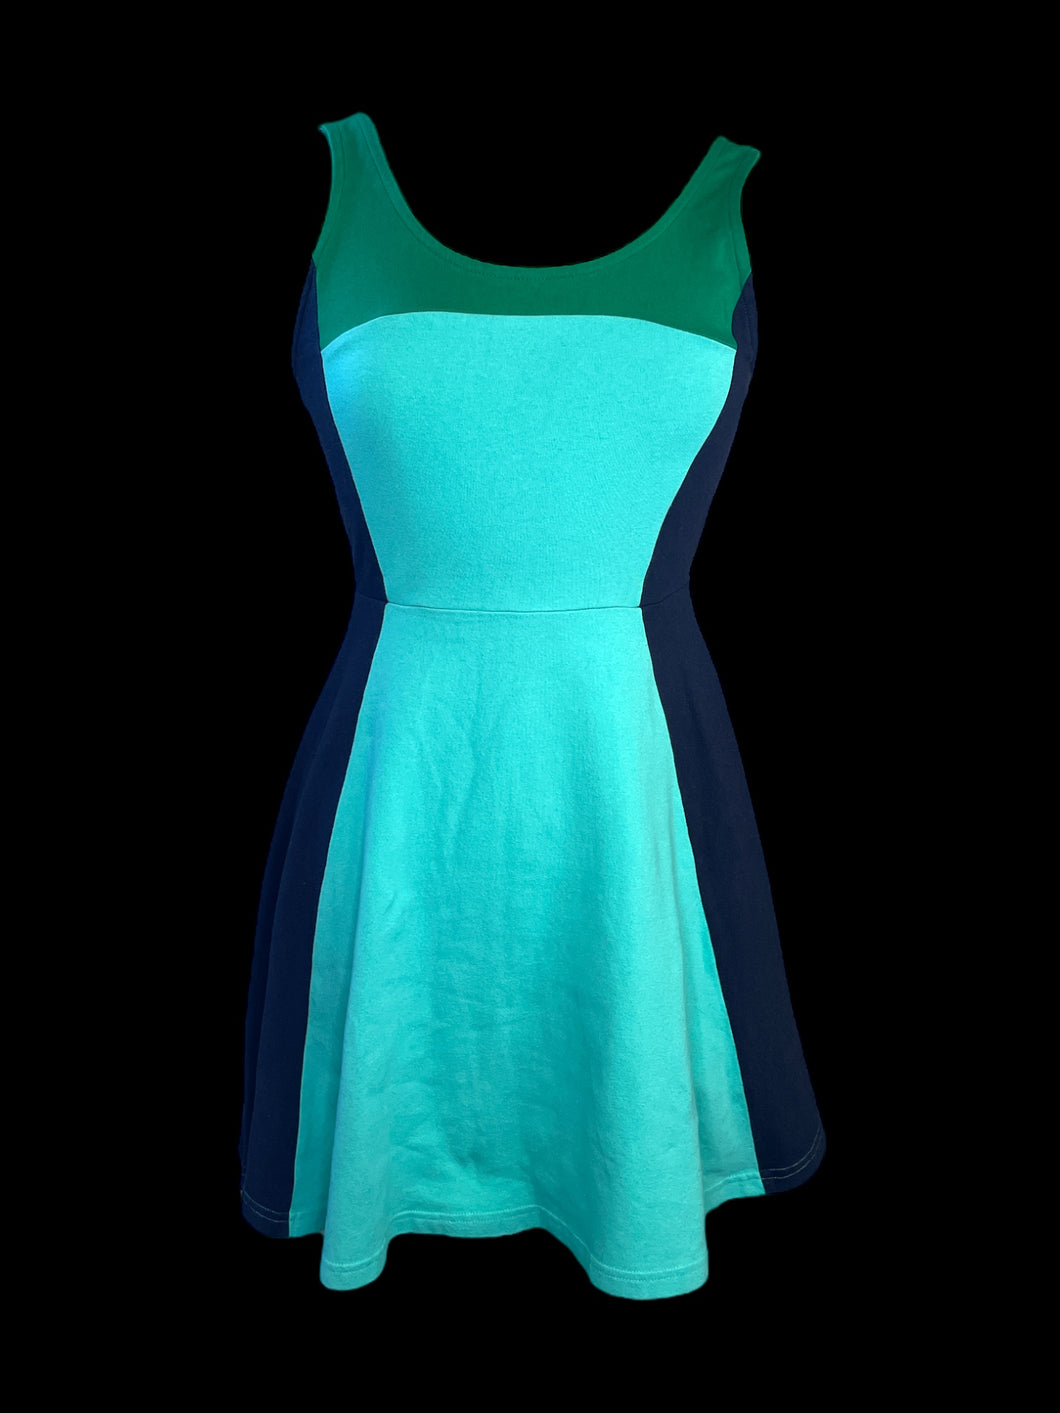 S Mint, green, & dark blue color block sleeveless a-line dress w/ clasp/zipper closure